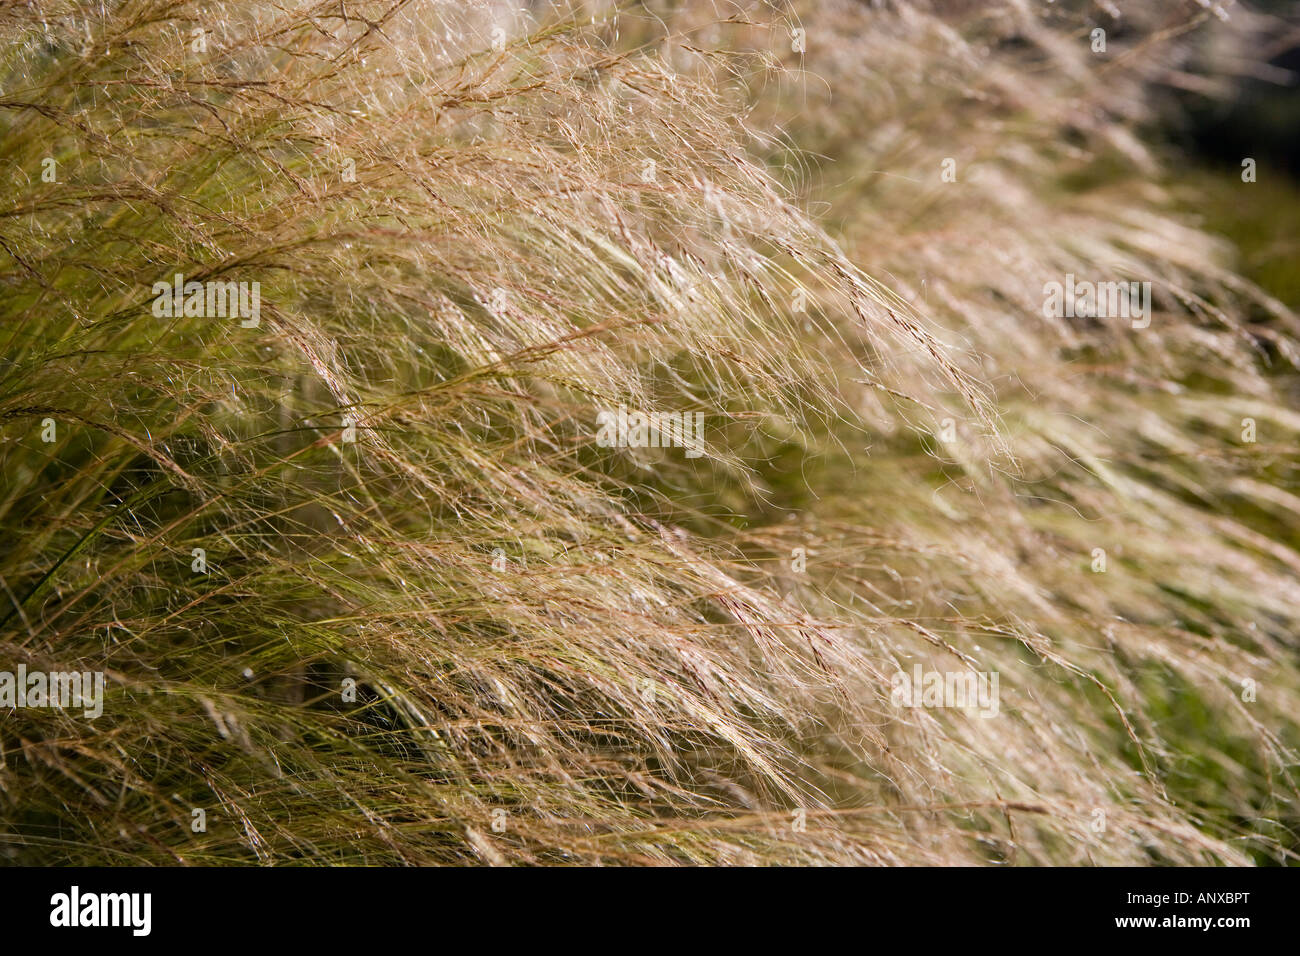 Ornamental grasses Stock Photo